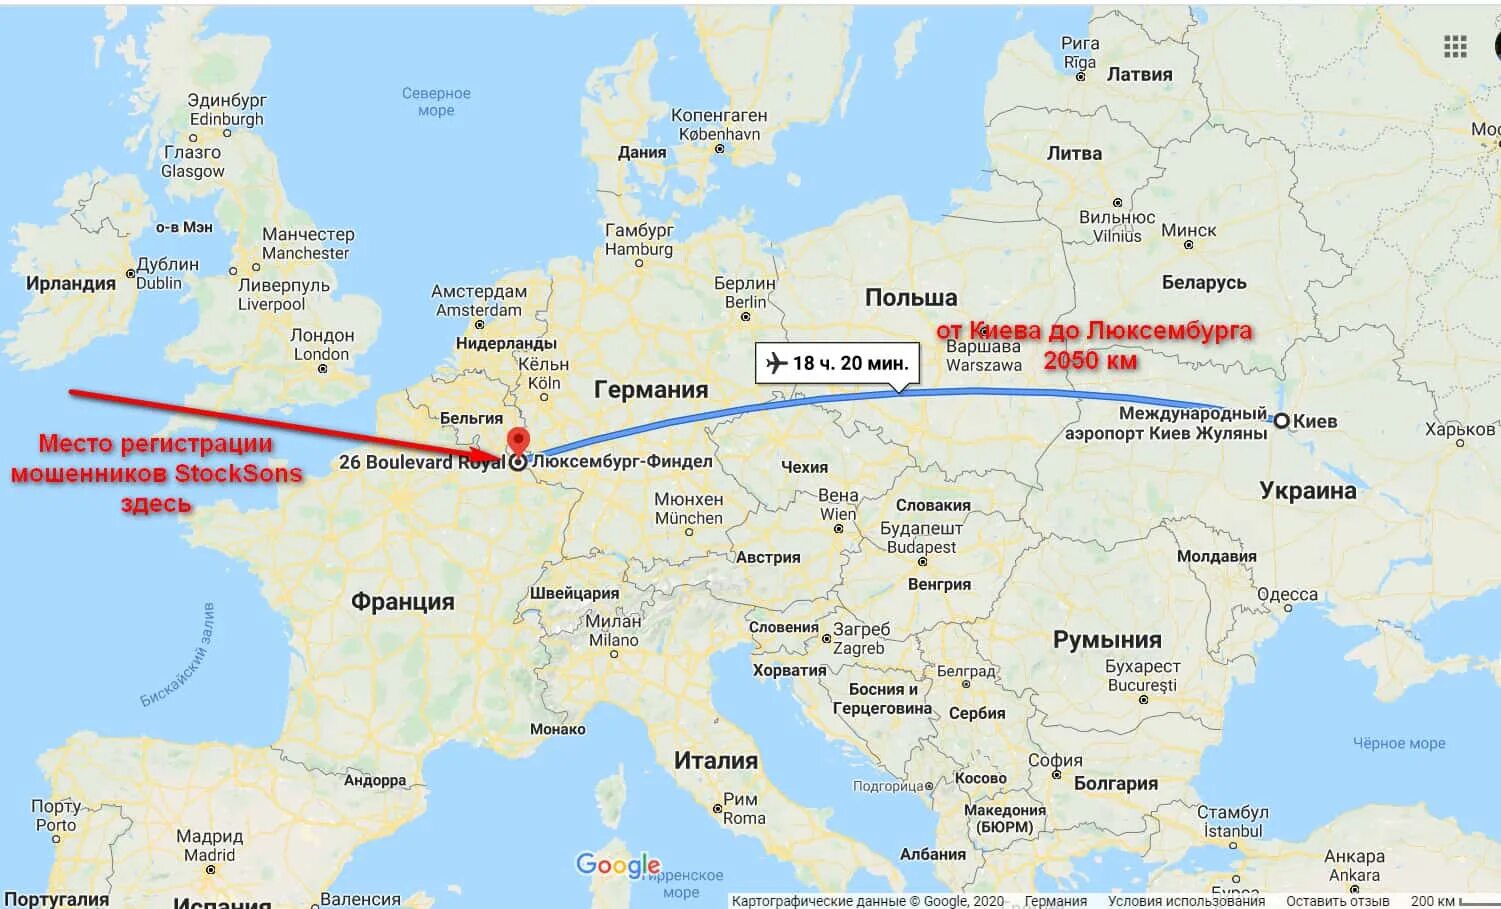 Расстояние от России до Украины. Расстояние от Киева. Сколько от России до Киева. Киев на карте. 250 км на карте